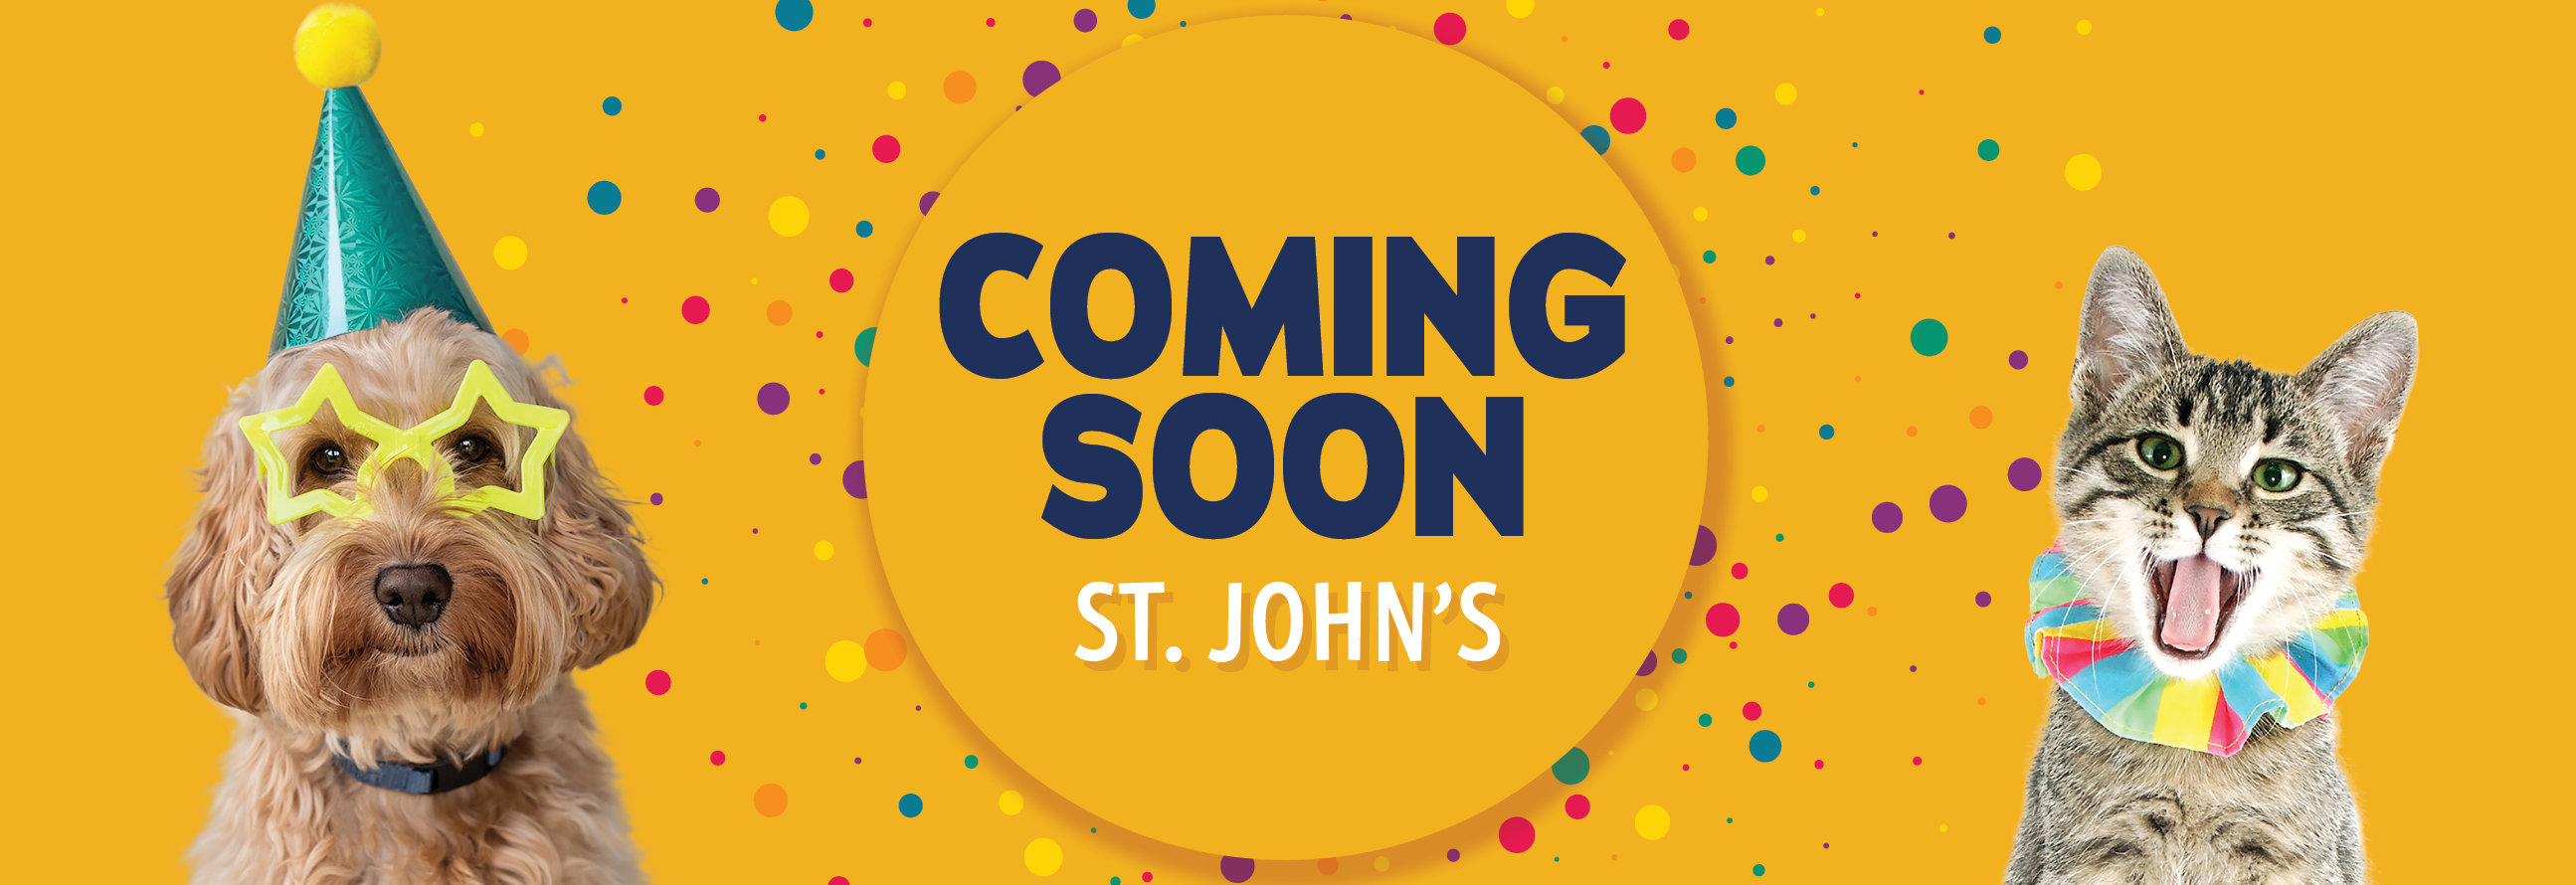 Saint John's location coming soon